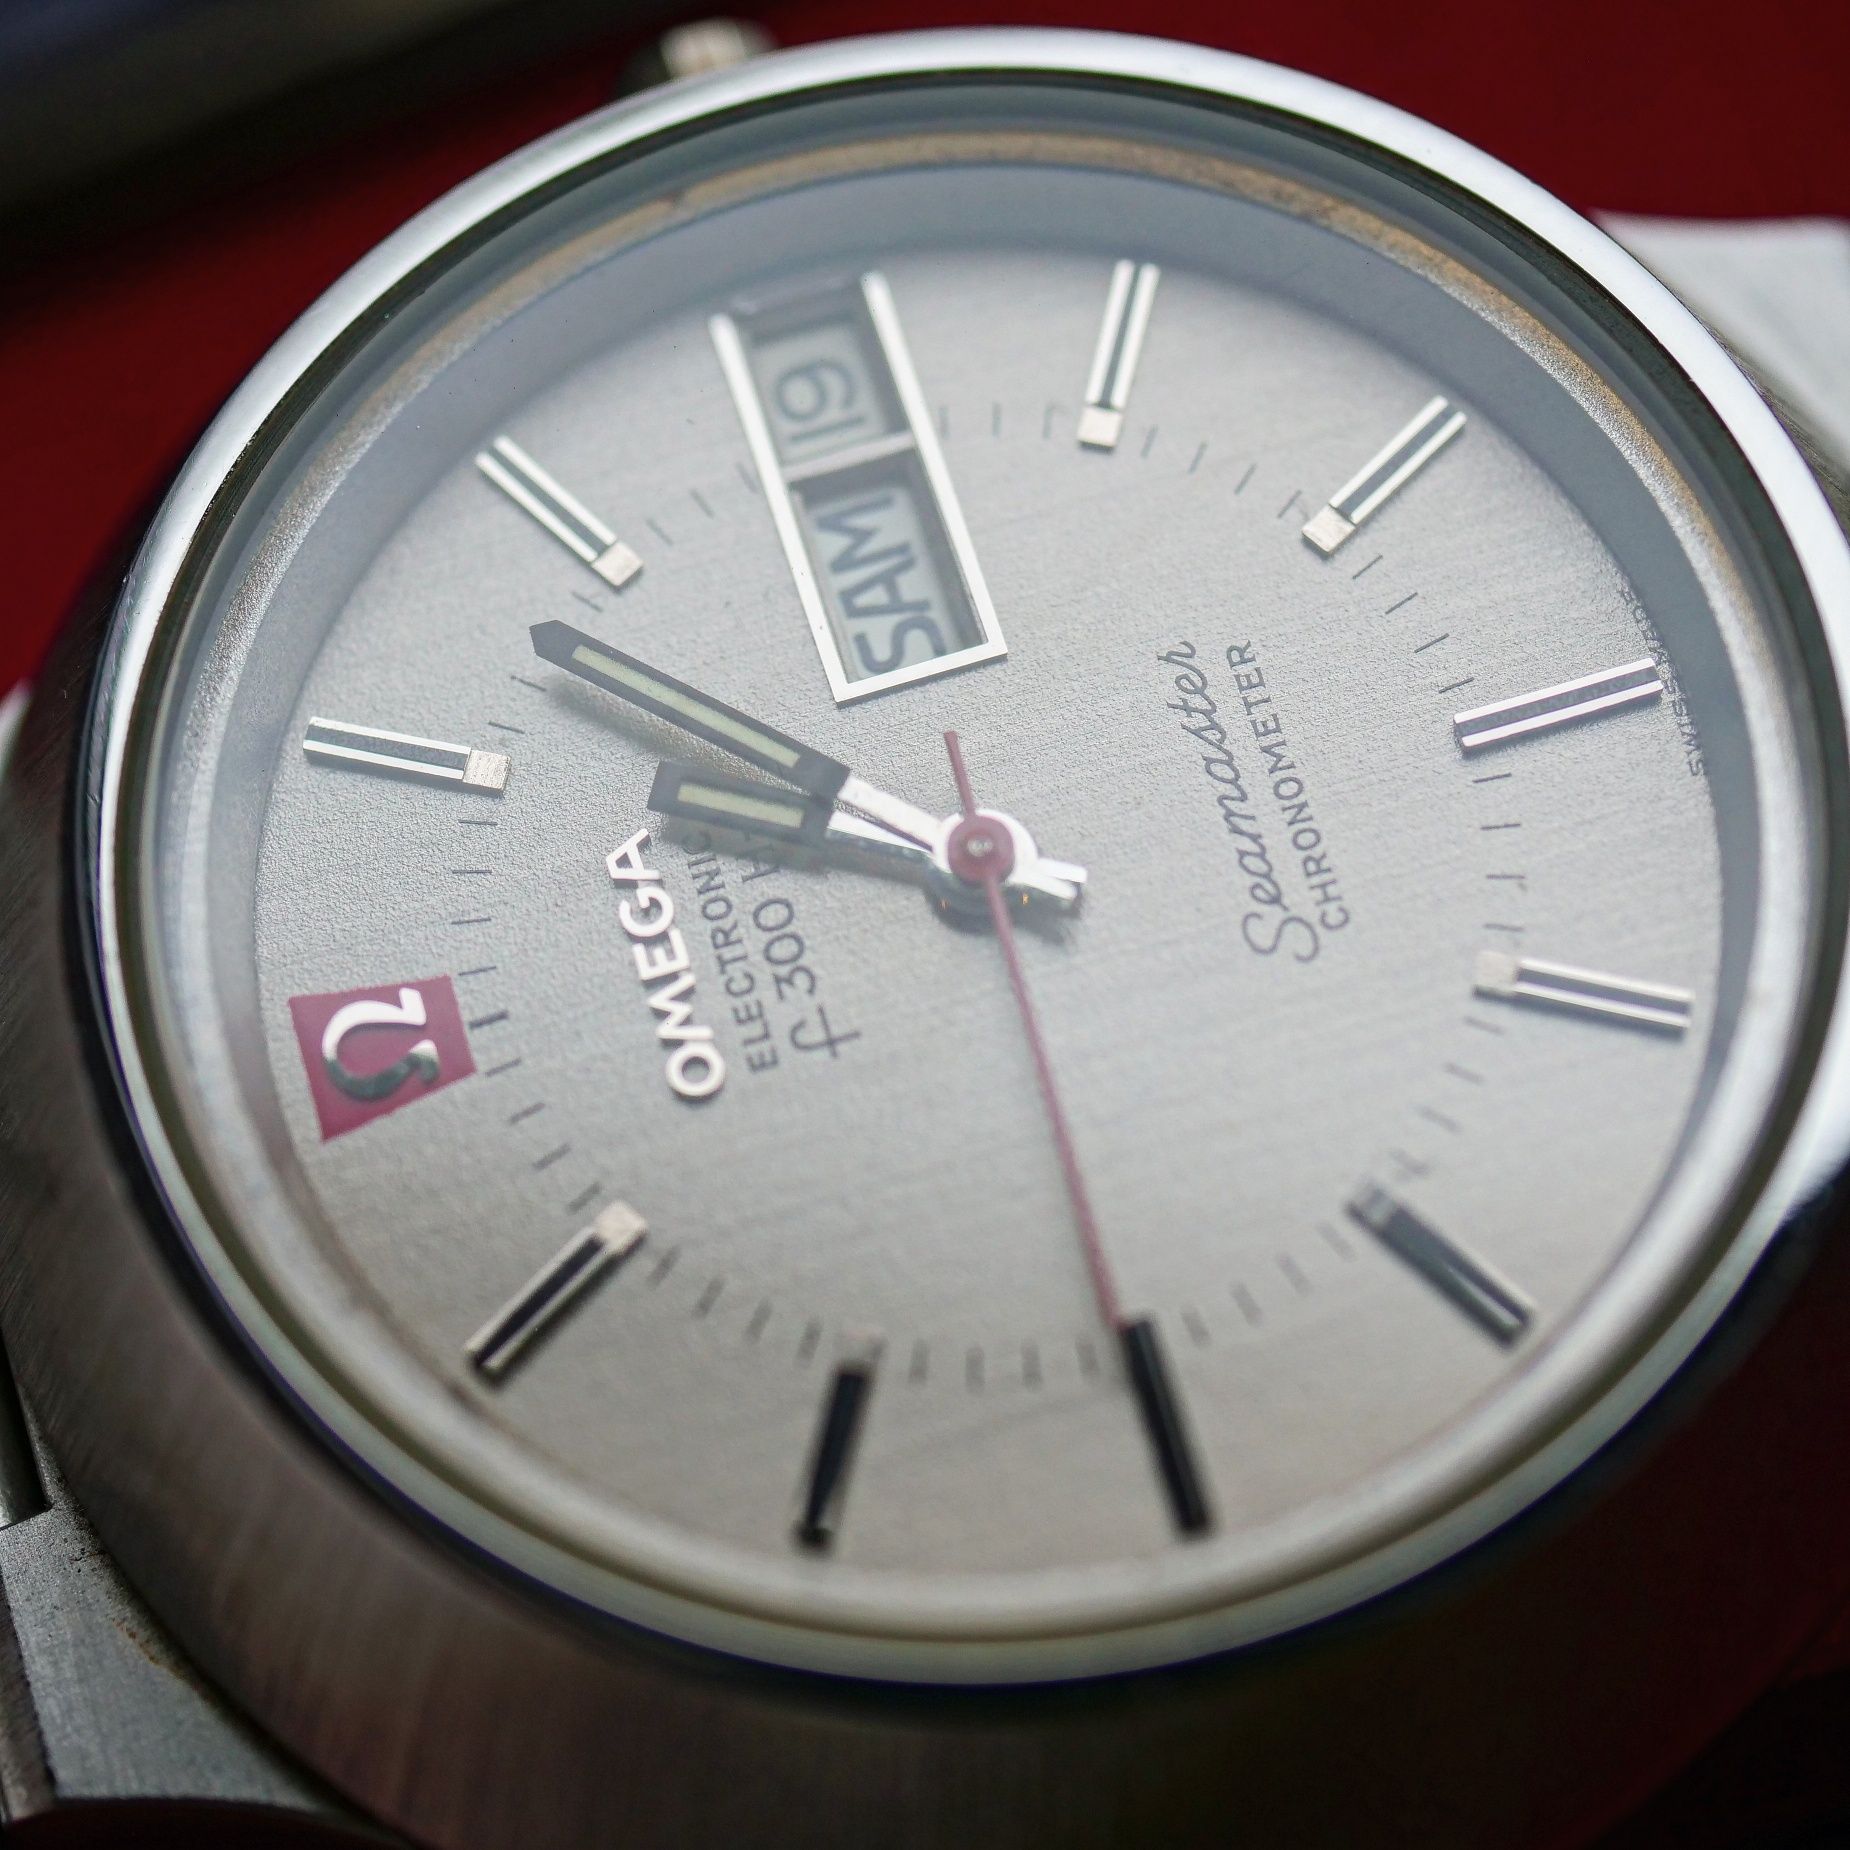 Omega Seamaster F300 swiss made zegarek szwajcarski vintage NOS cudo